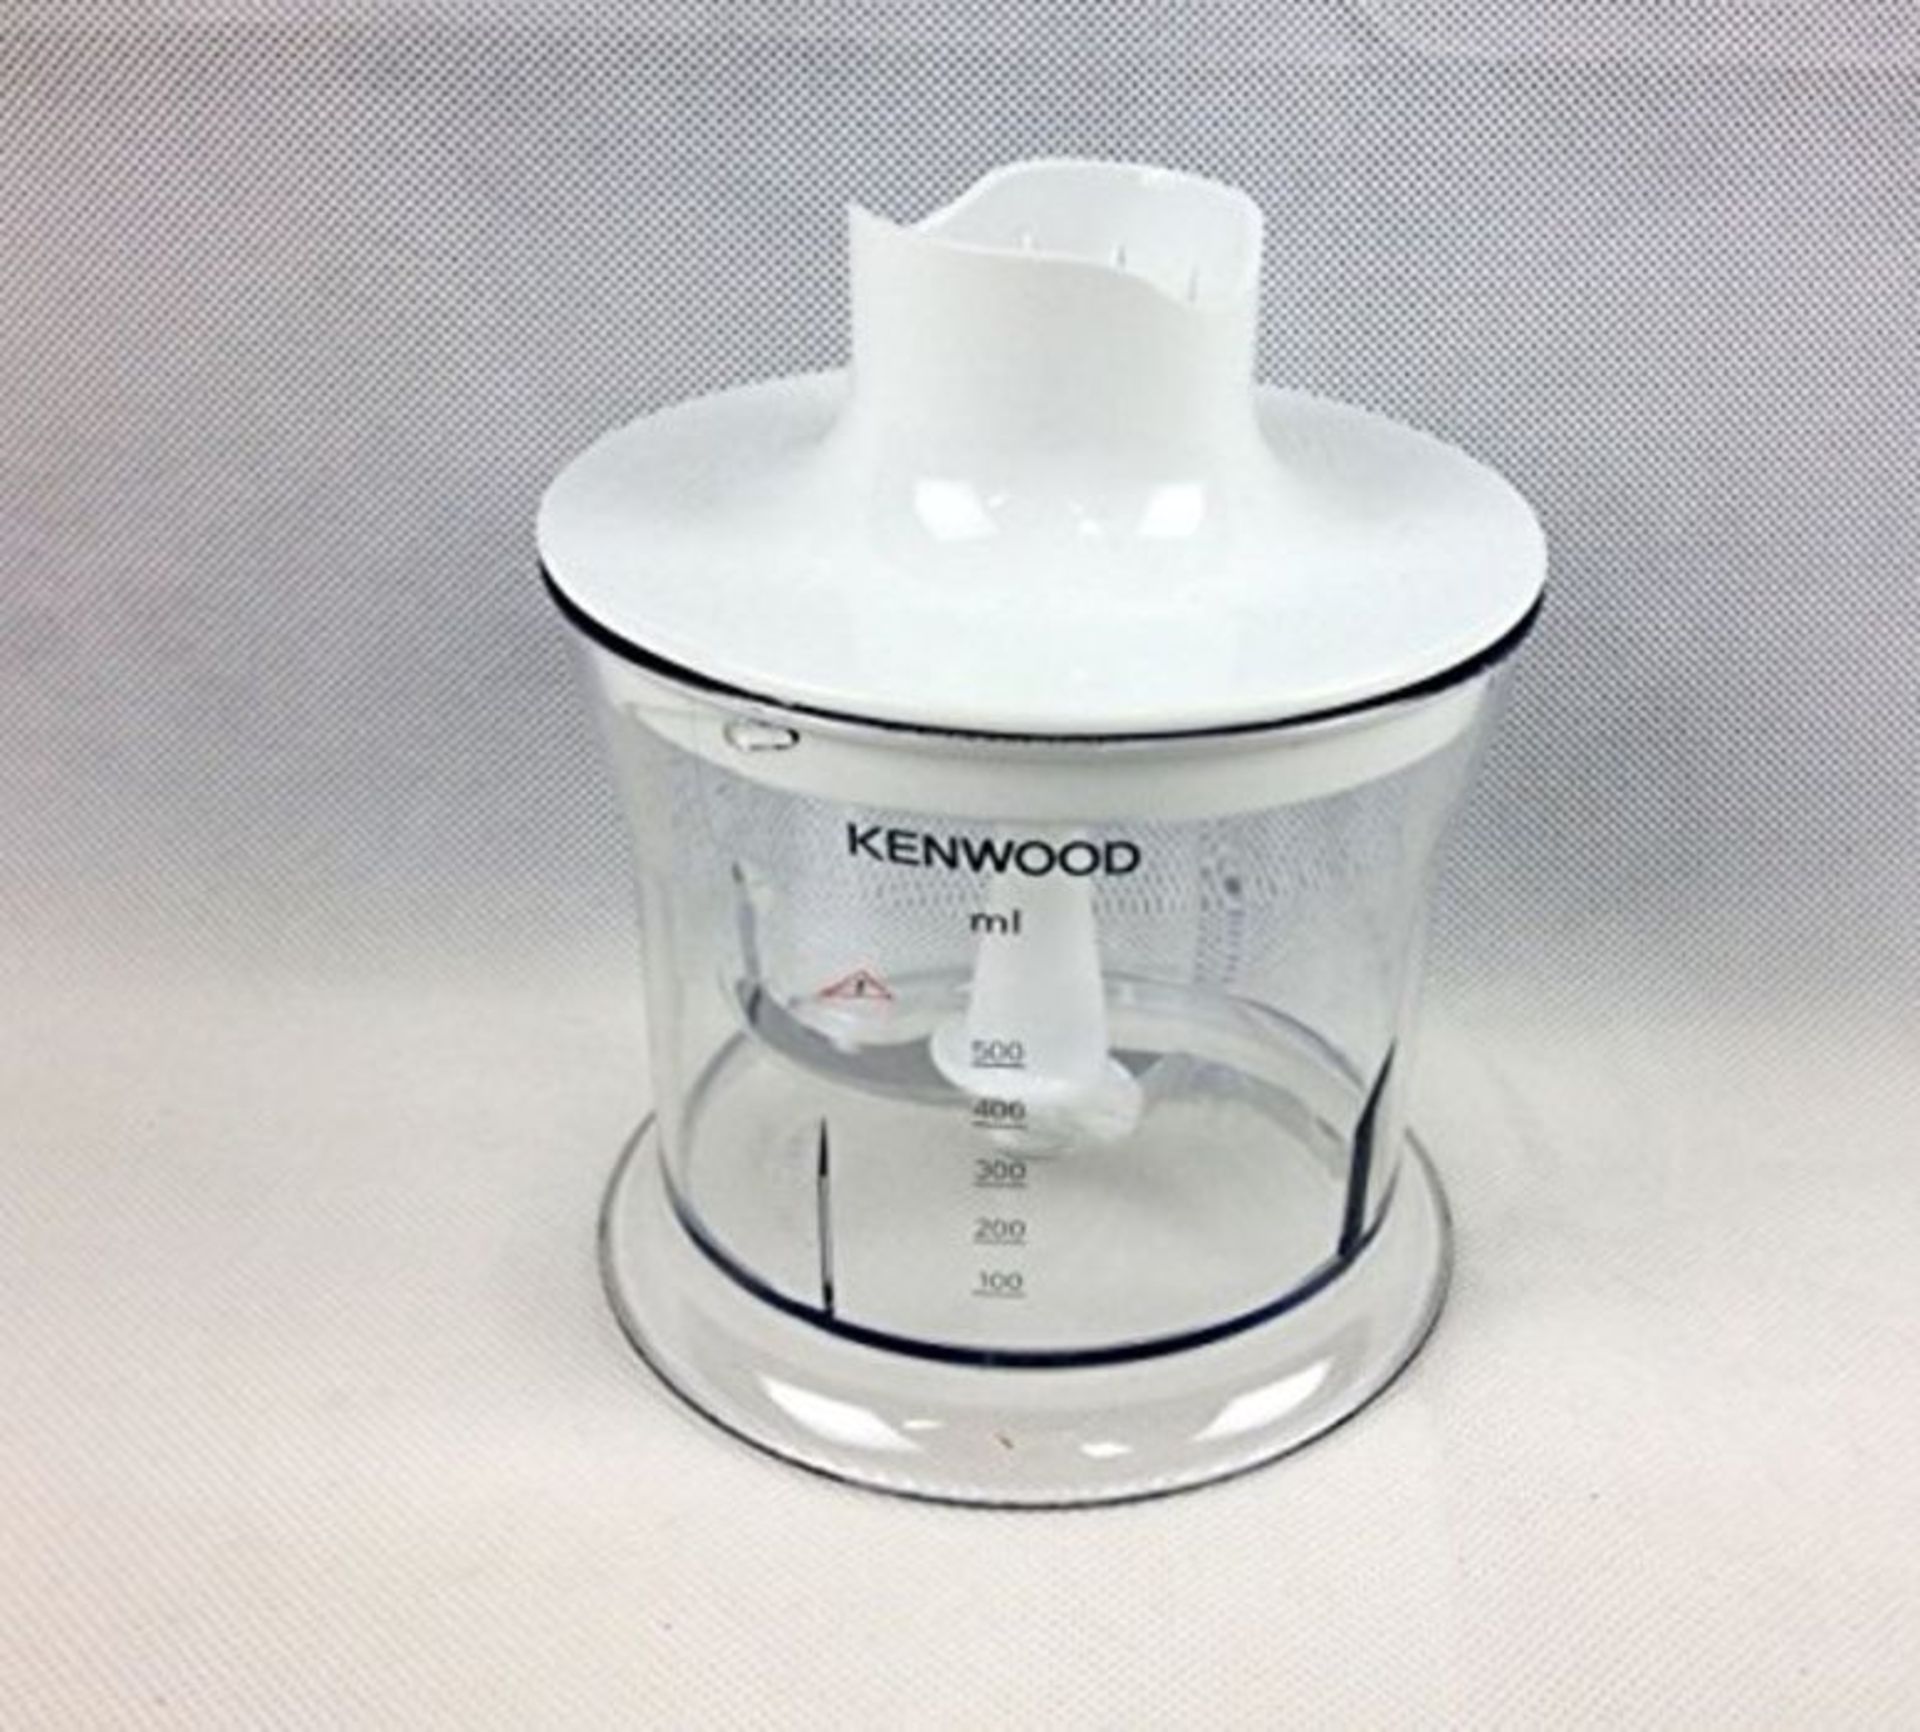 [INCOMPLETE] Kenwood Kenwood Triblade Minipimer Tritatutto Hb Hbm Hb724 Hb720 Hb710 Hd